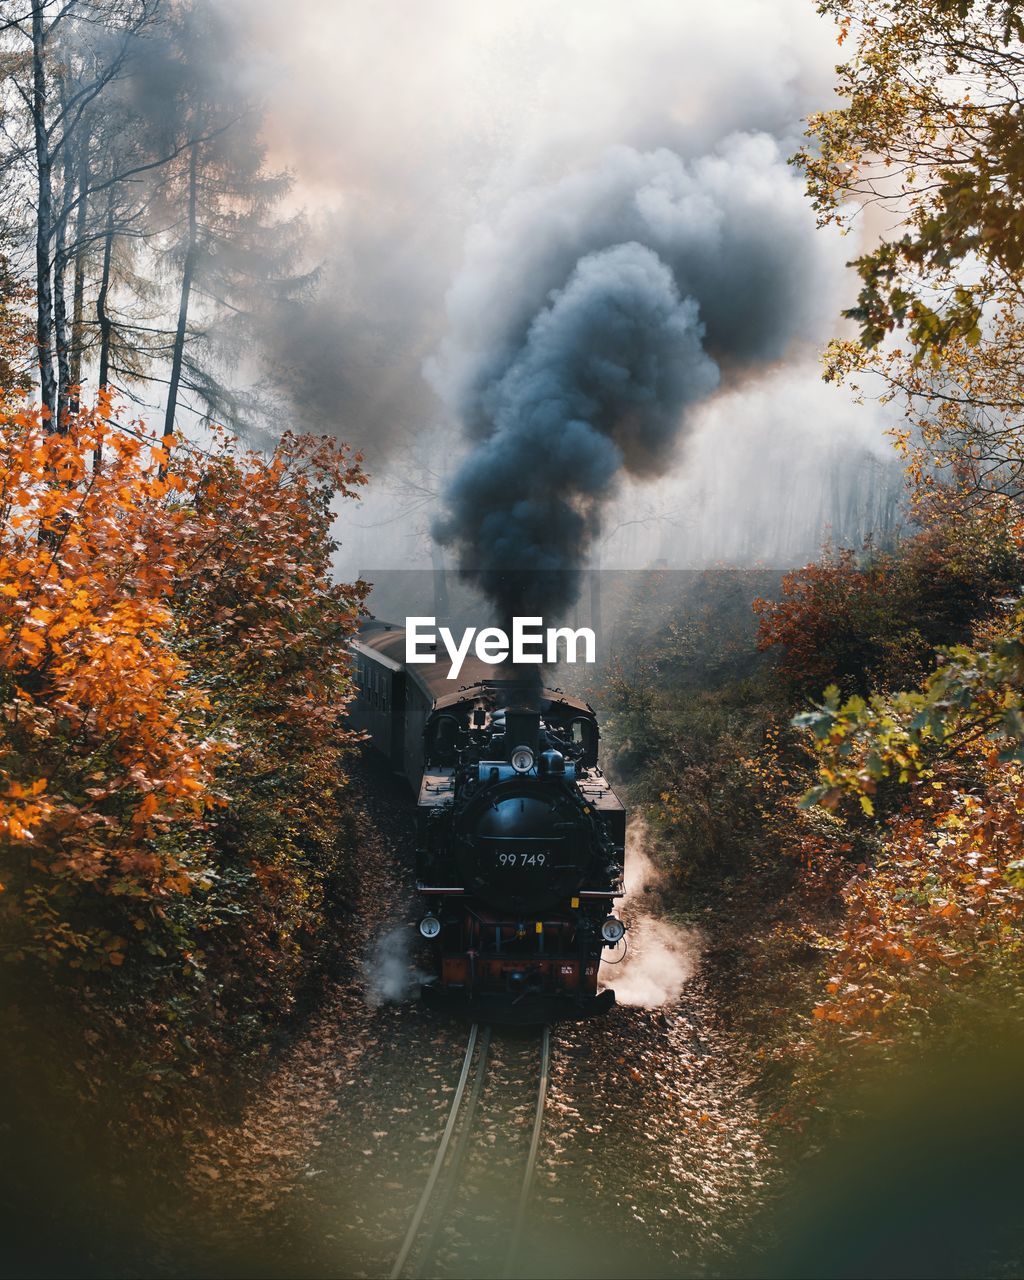 Train emitting smoke amidst trees during autumn